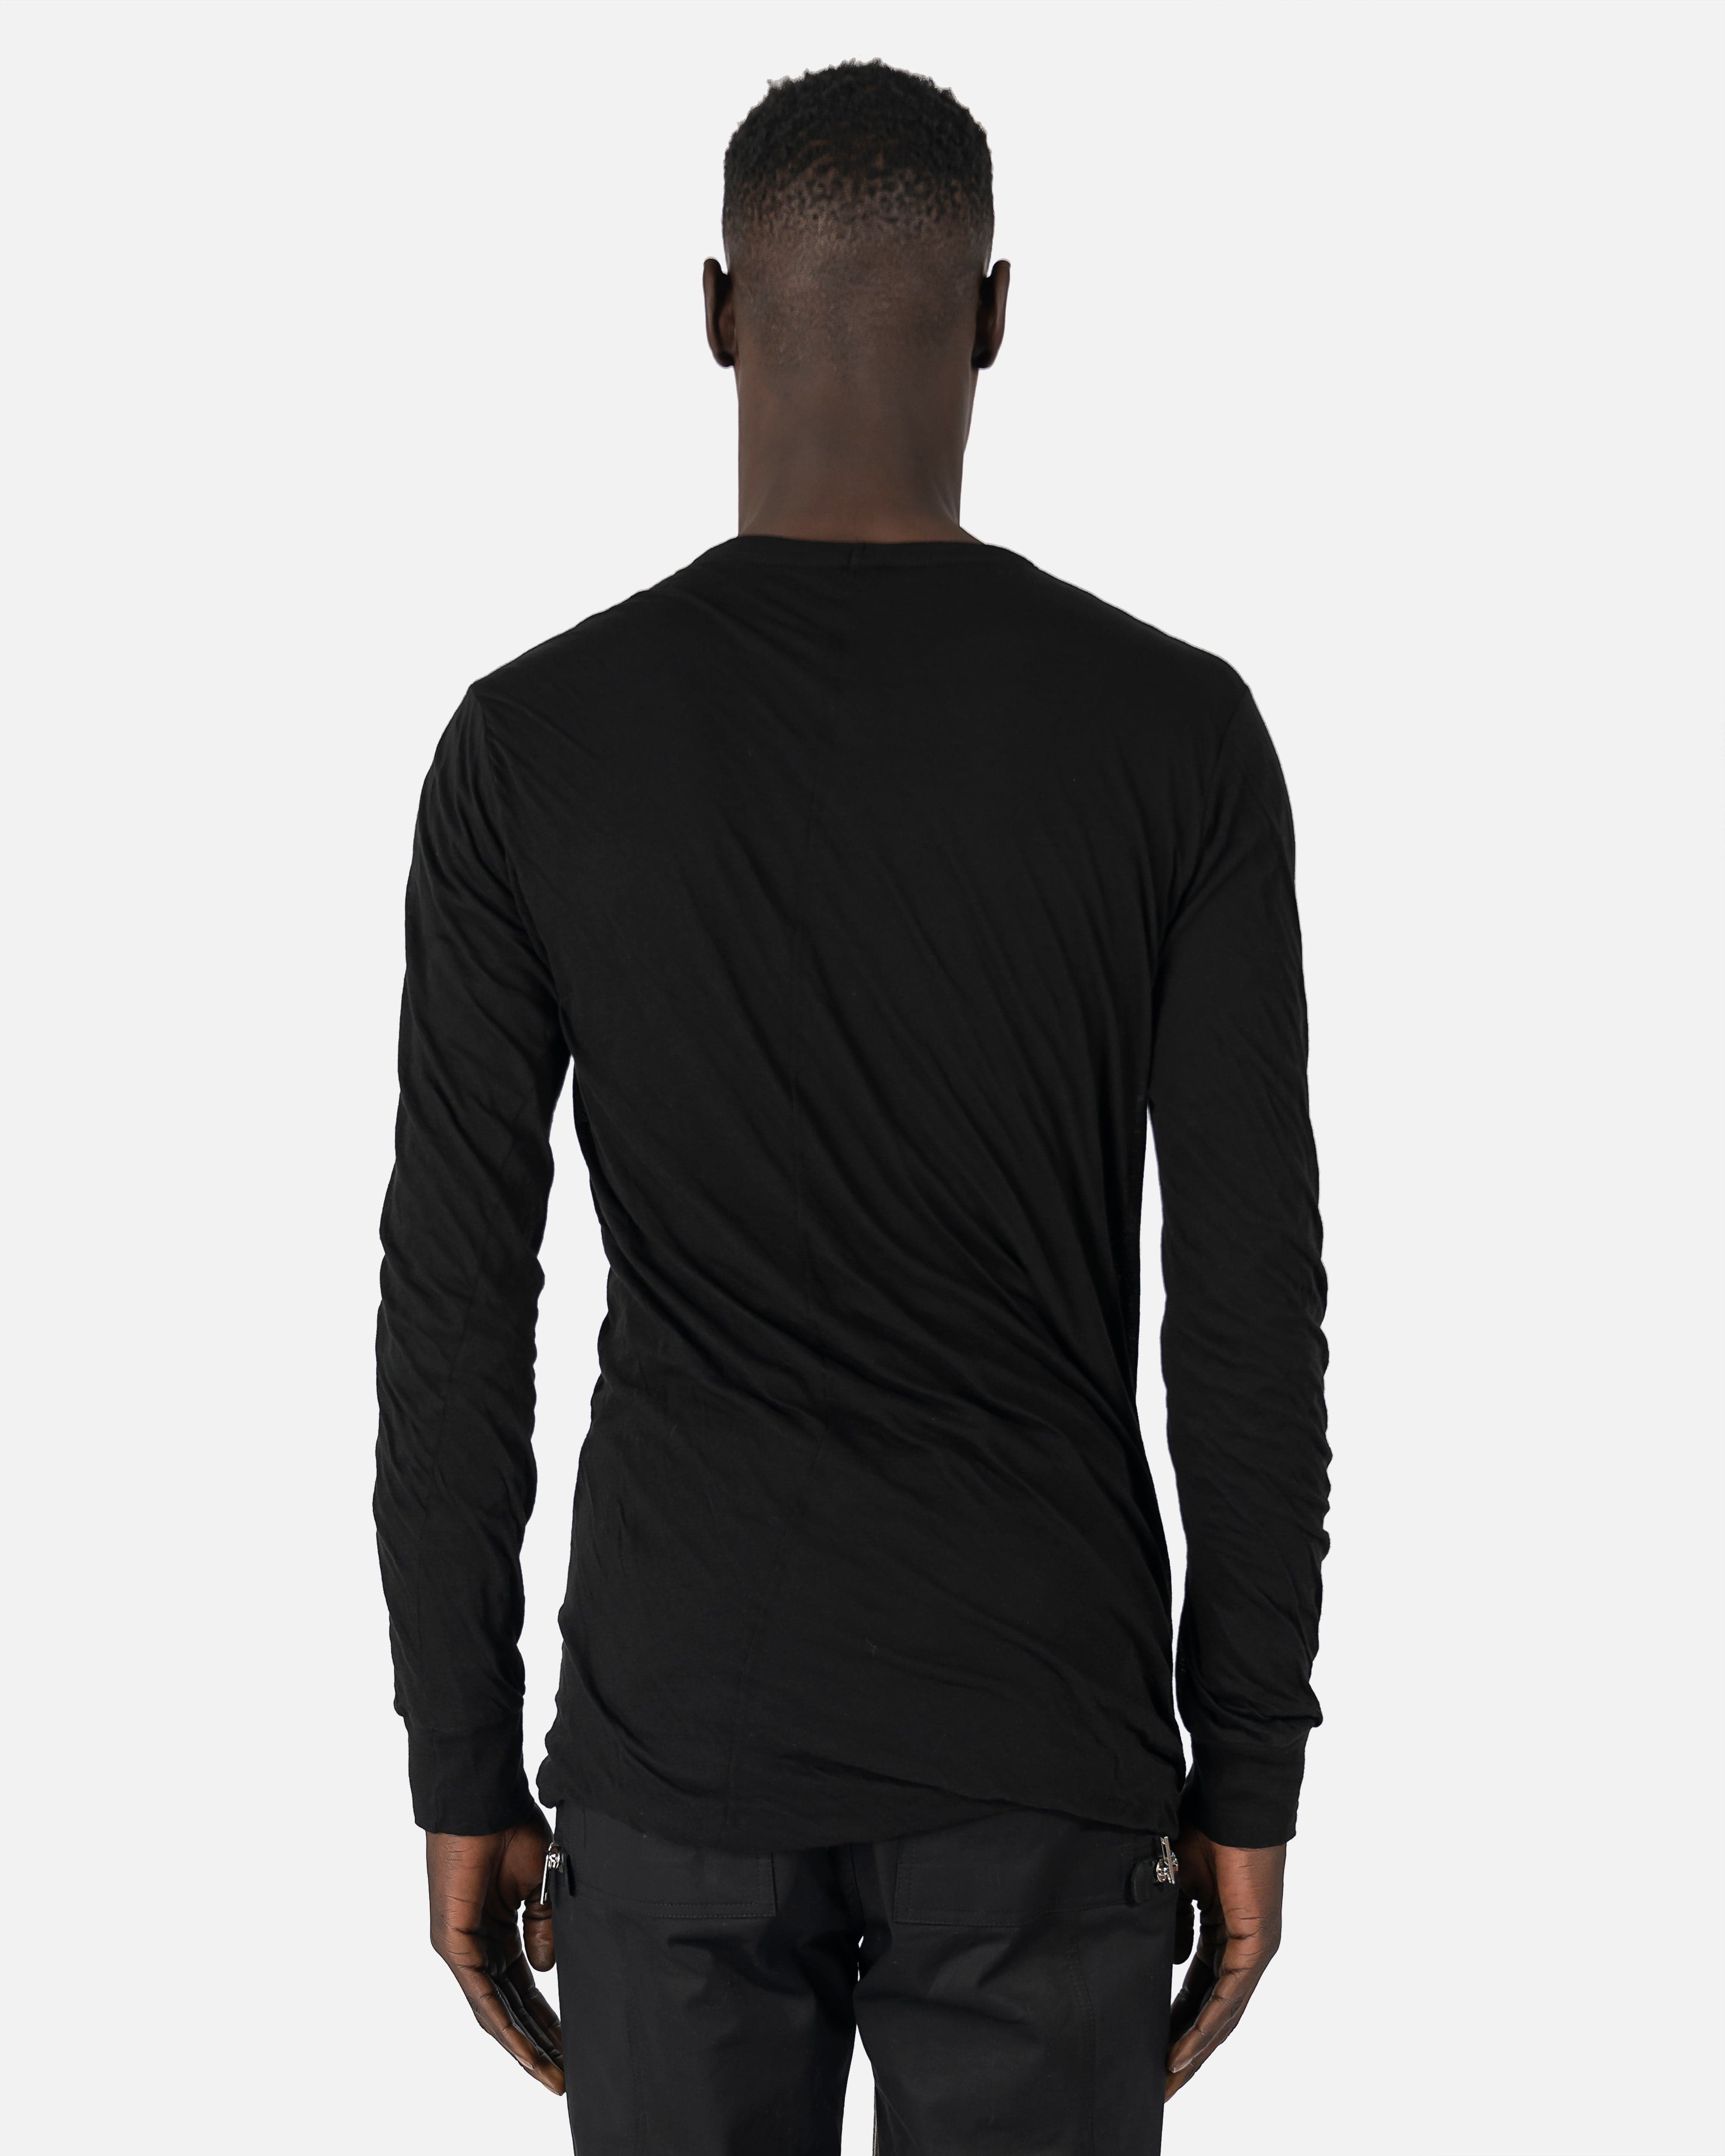 Double Layer Longsleeve T-Shirt in Black